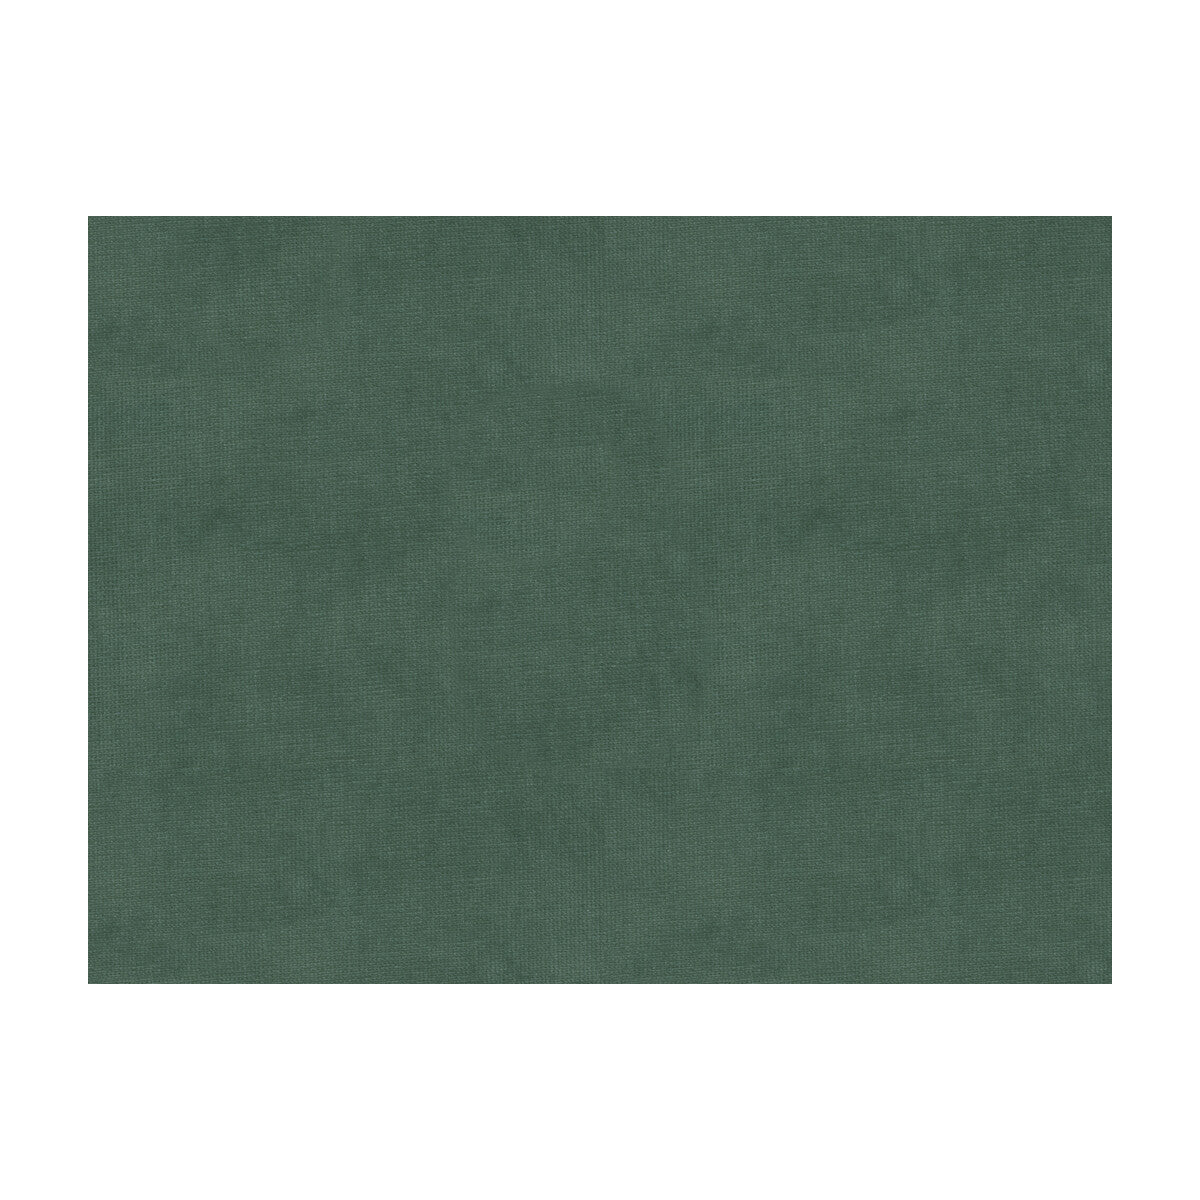 Charmant Velvet fabric in zinc color - pattern 8013150.135.0 - by Brunschwig &amp; Fils